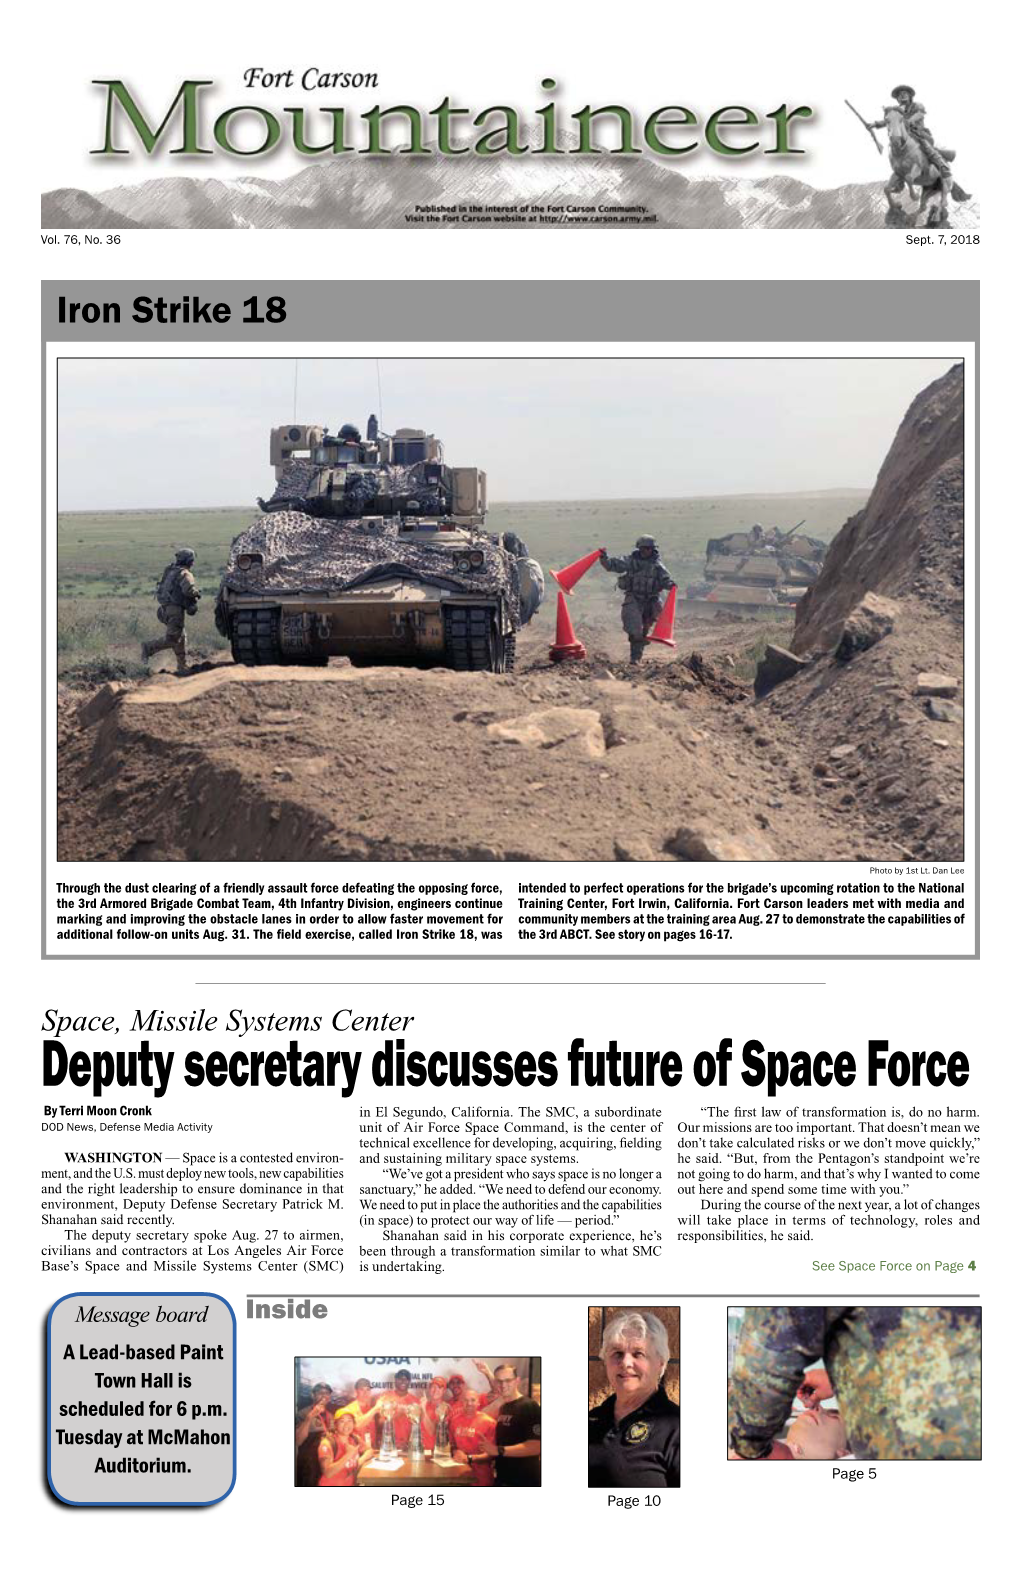 Deputy Secretary Discusses Future of Space Force by Terri Moon Cronk in El Segundo, California